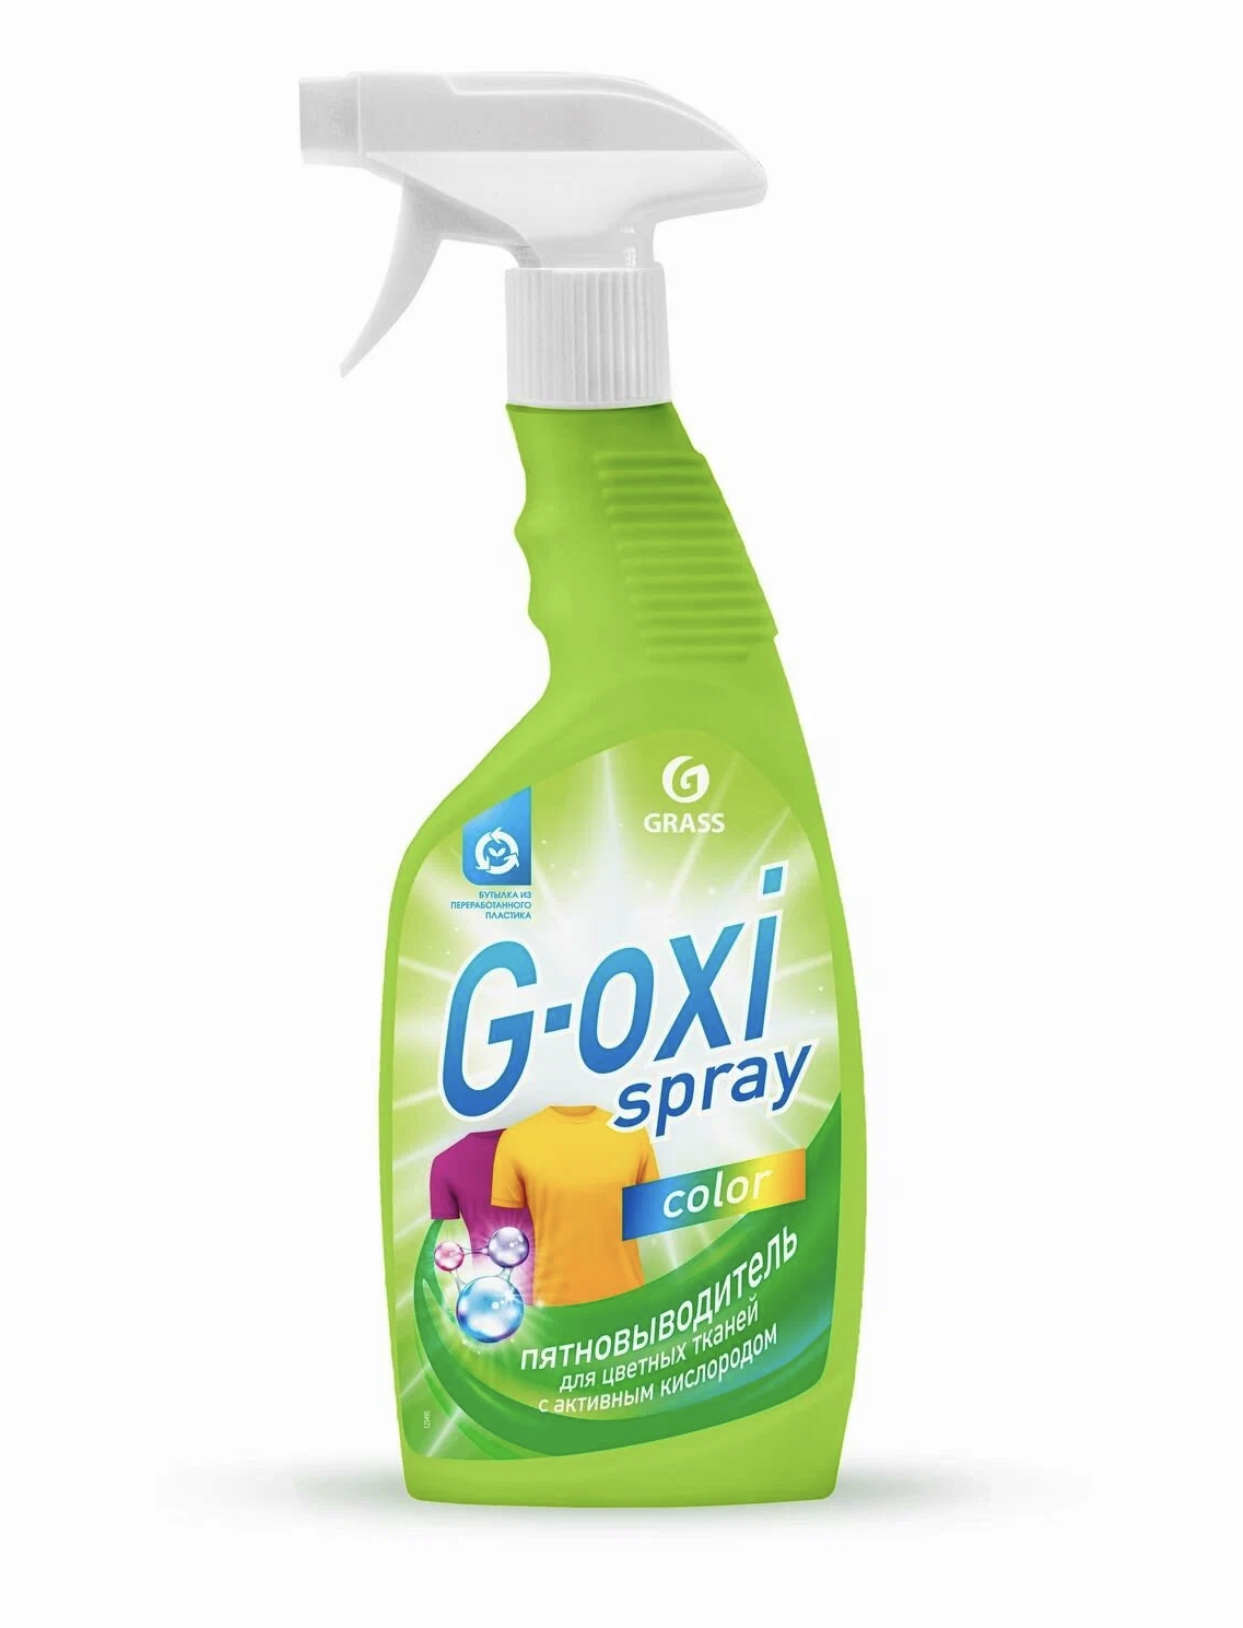   / Grass G-Oxi spray - -    Color 600 